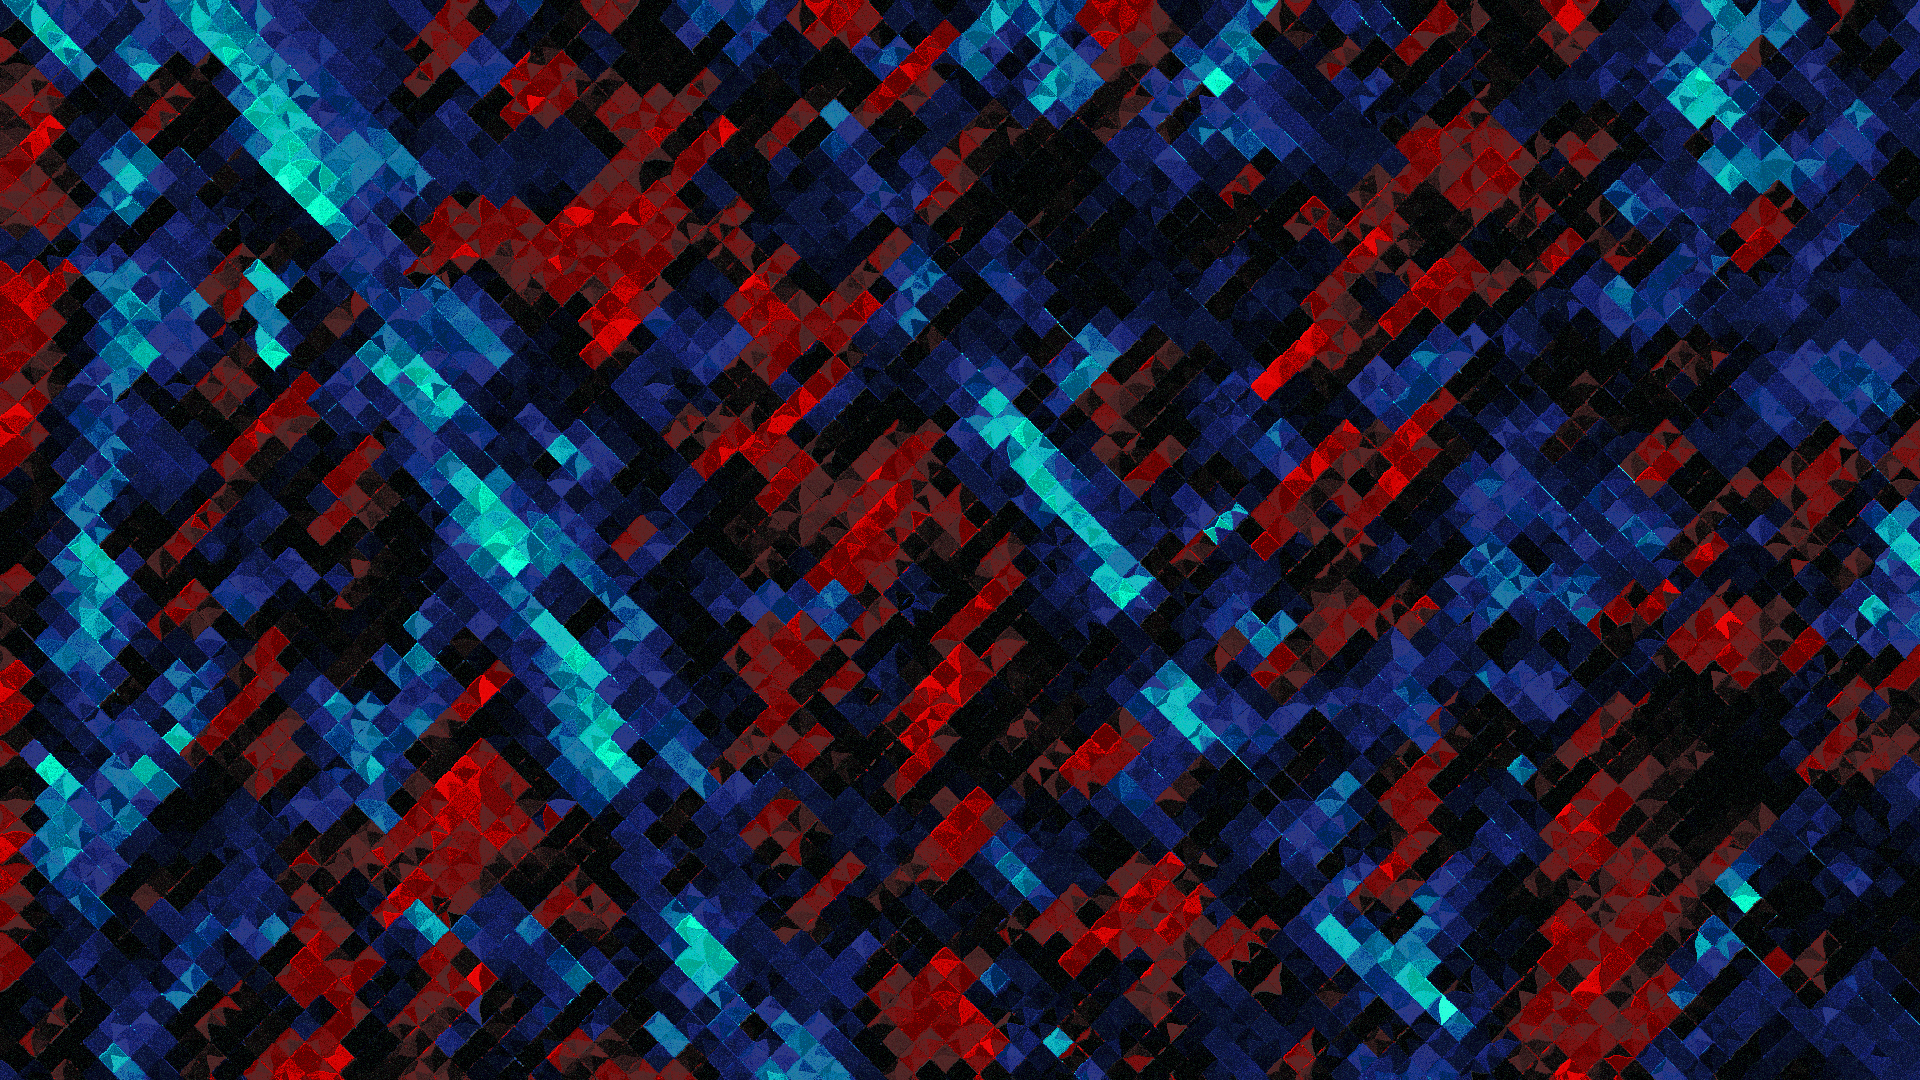 Abstract Digital Texture Red Blue Dark Pattern Shapes Minimalism Digital Art Square Tiles 1920x1080